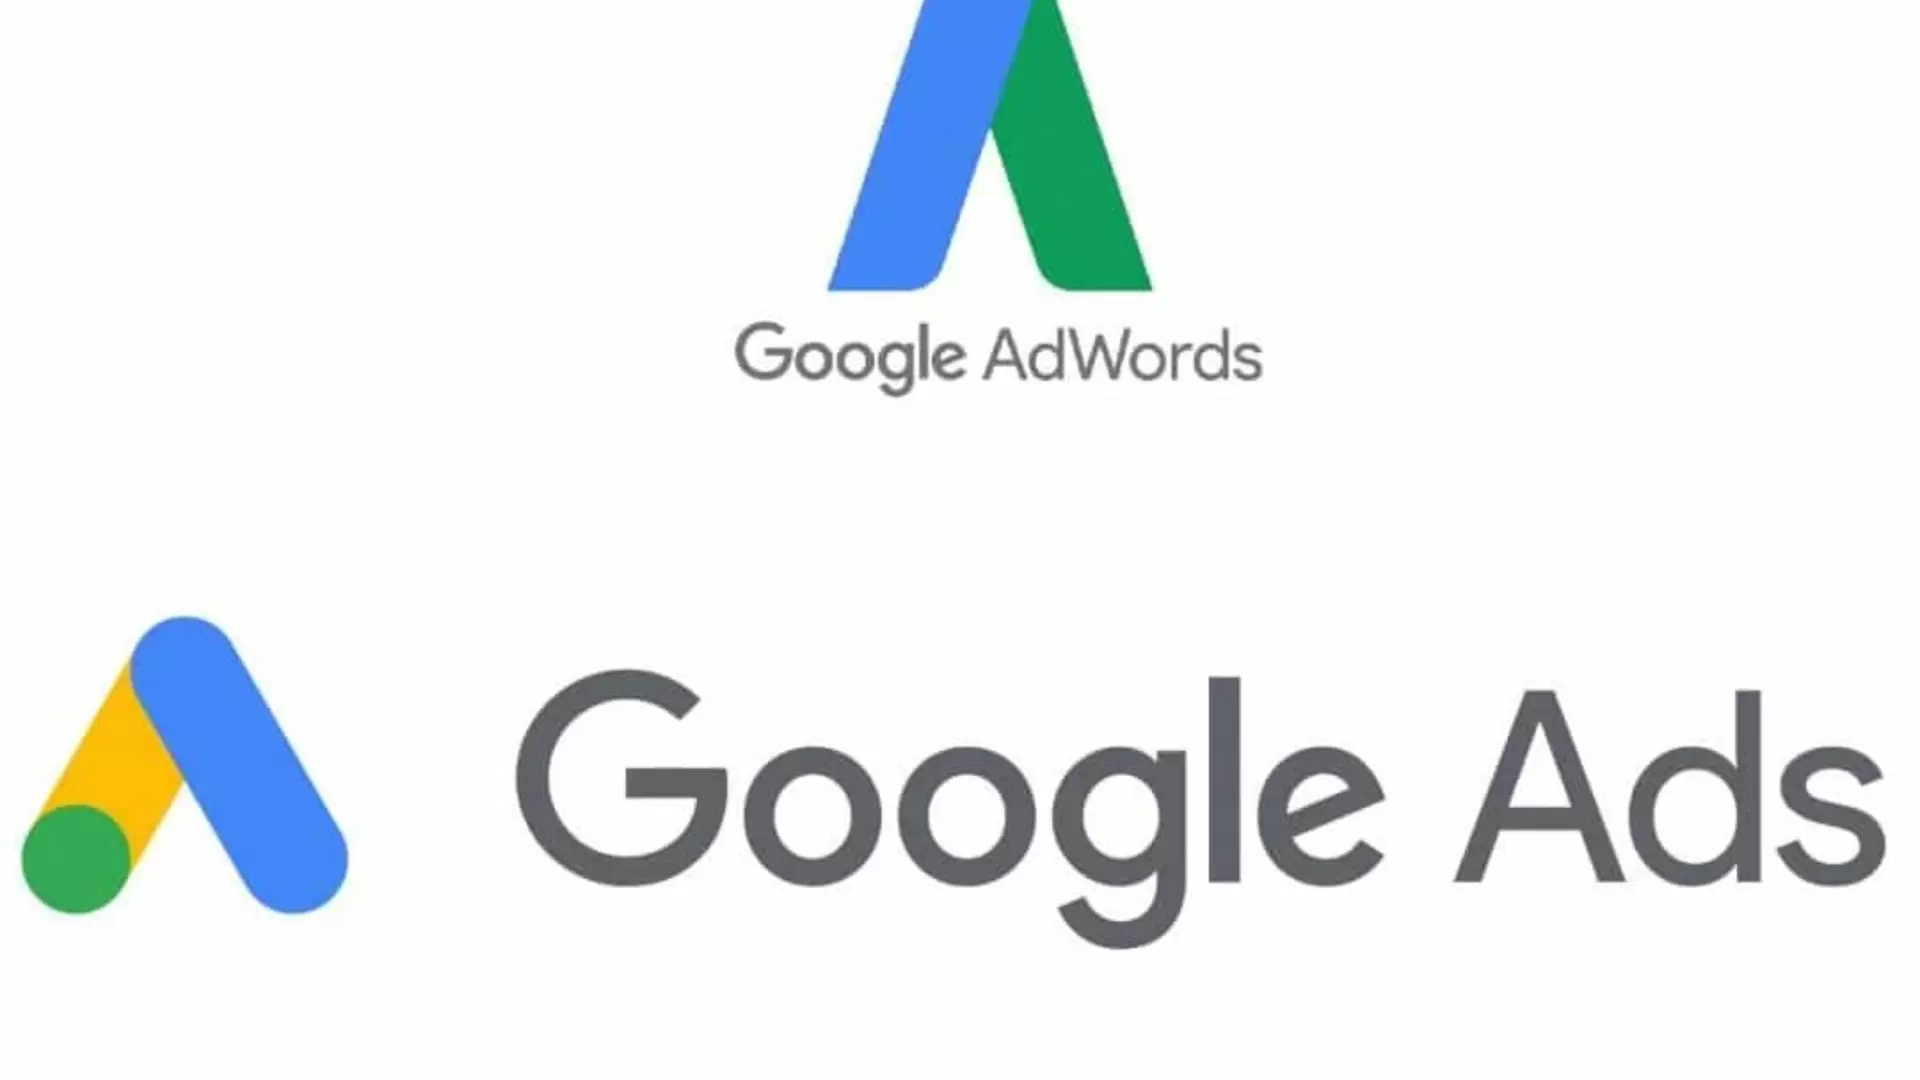 Google Ads in 2007